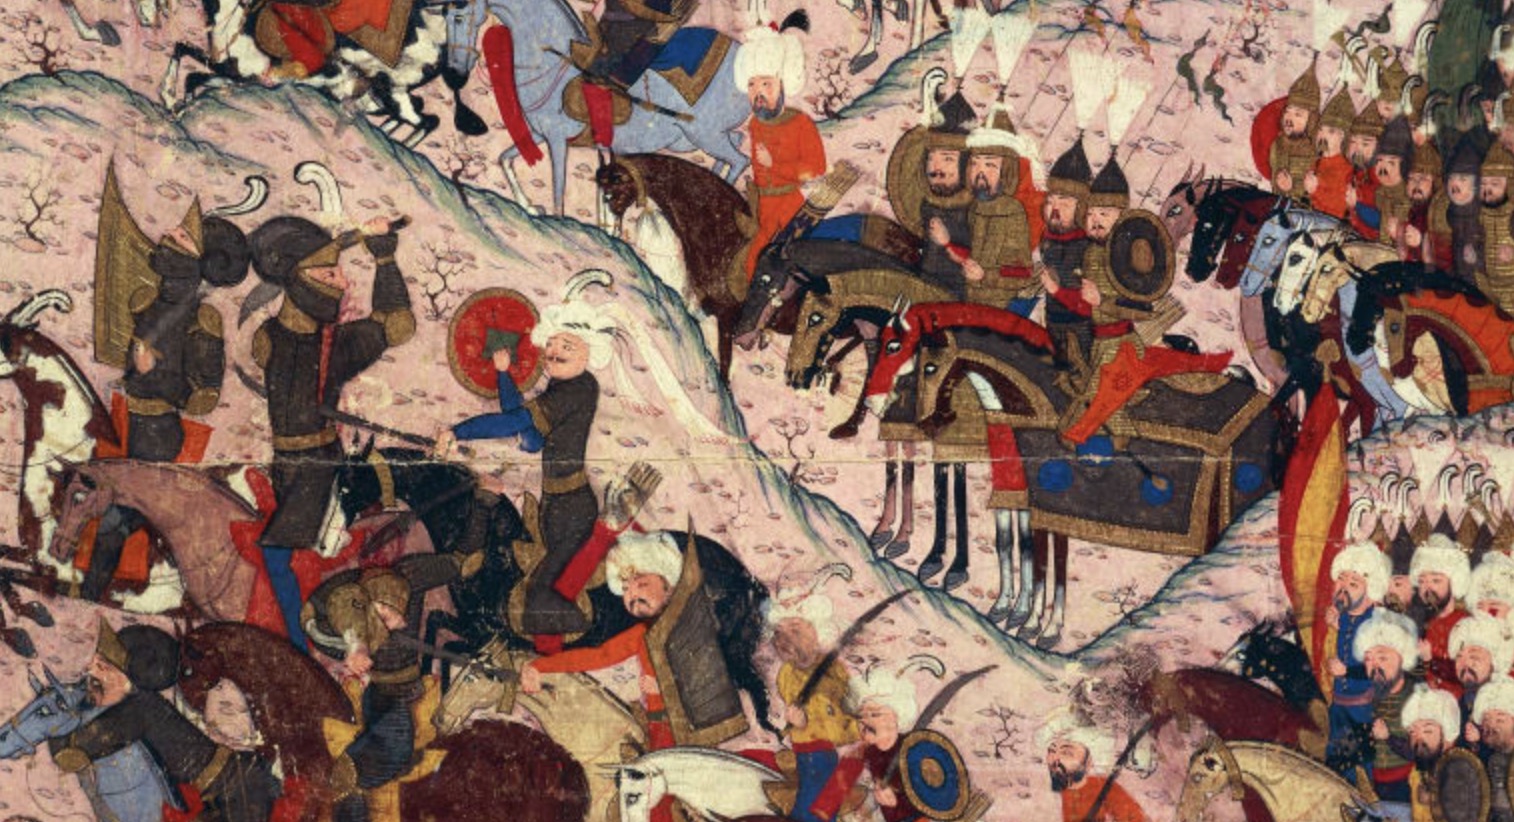  Kush ishin Otomanët?